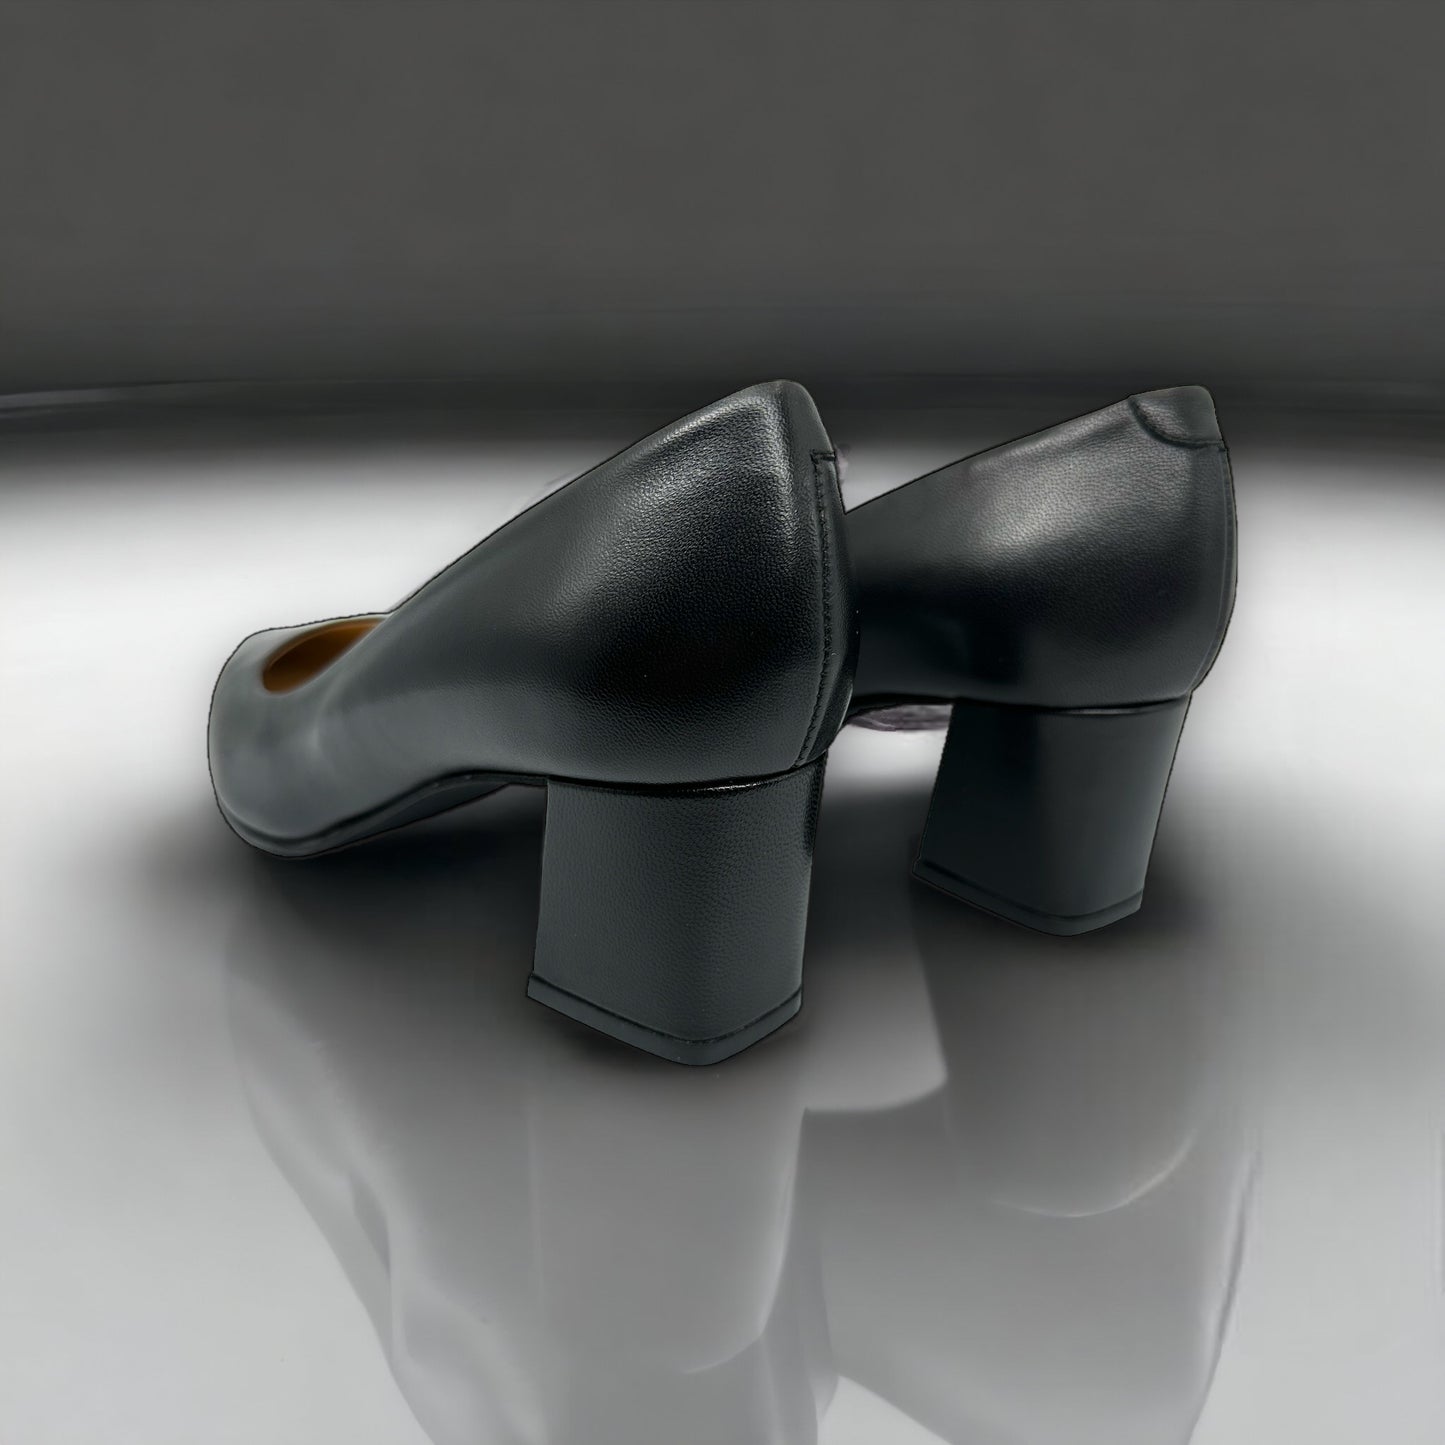 The Lexie Black Leather Bloch Heel Pump Shoe Final Sale!